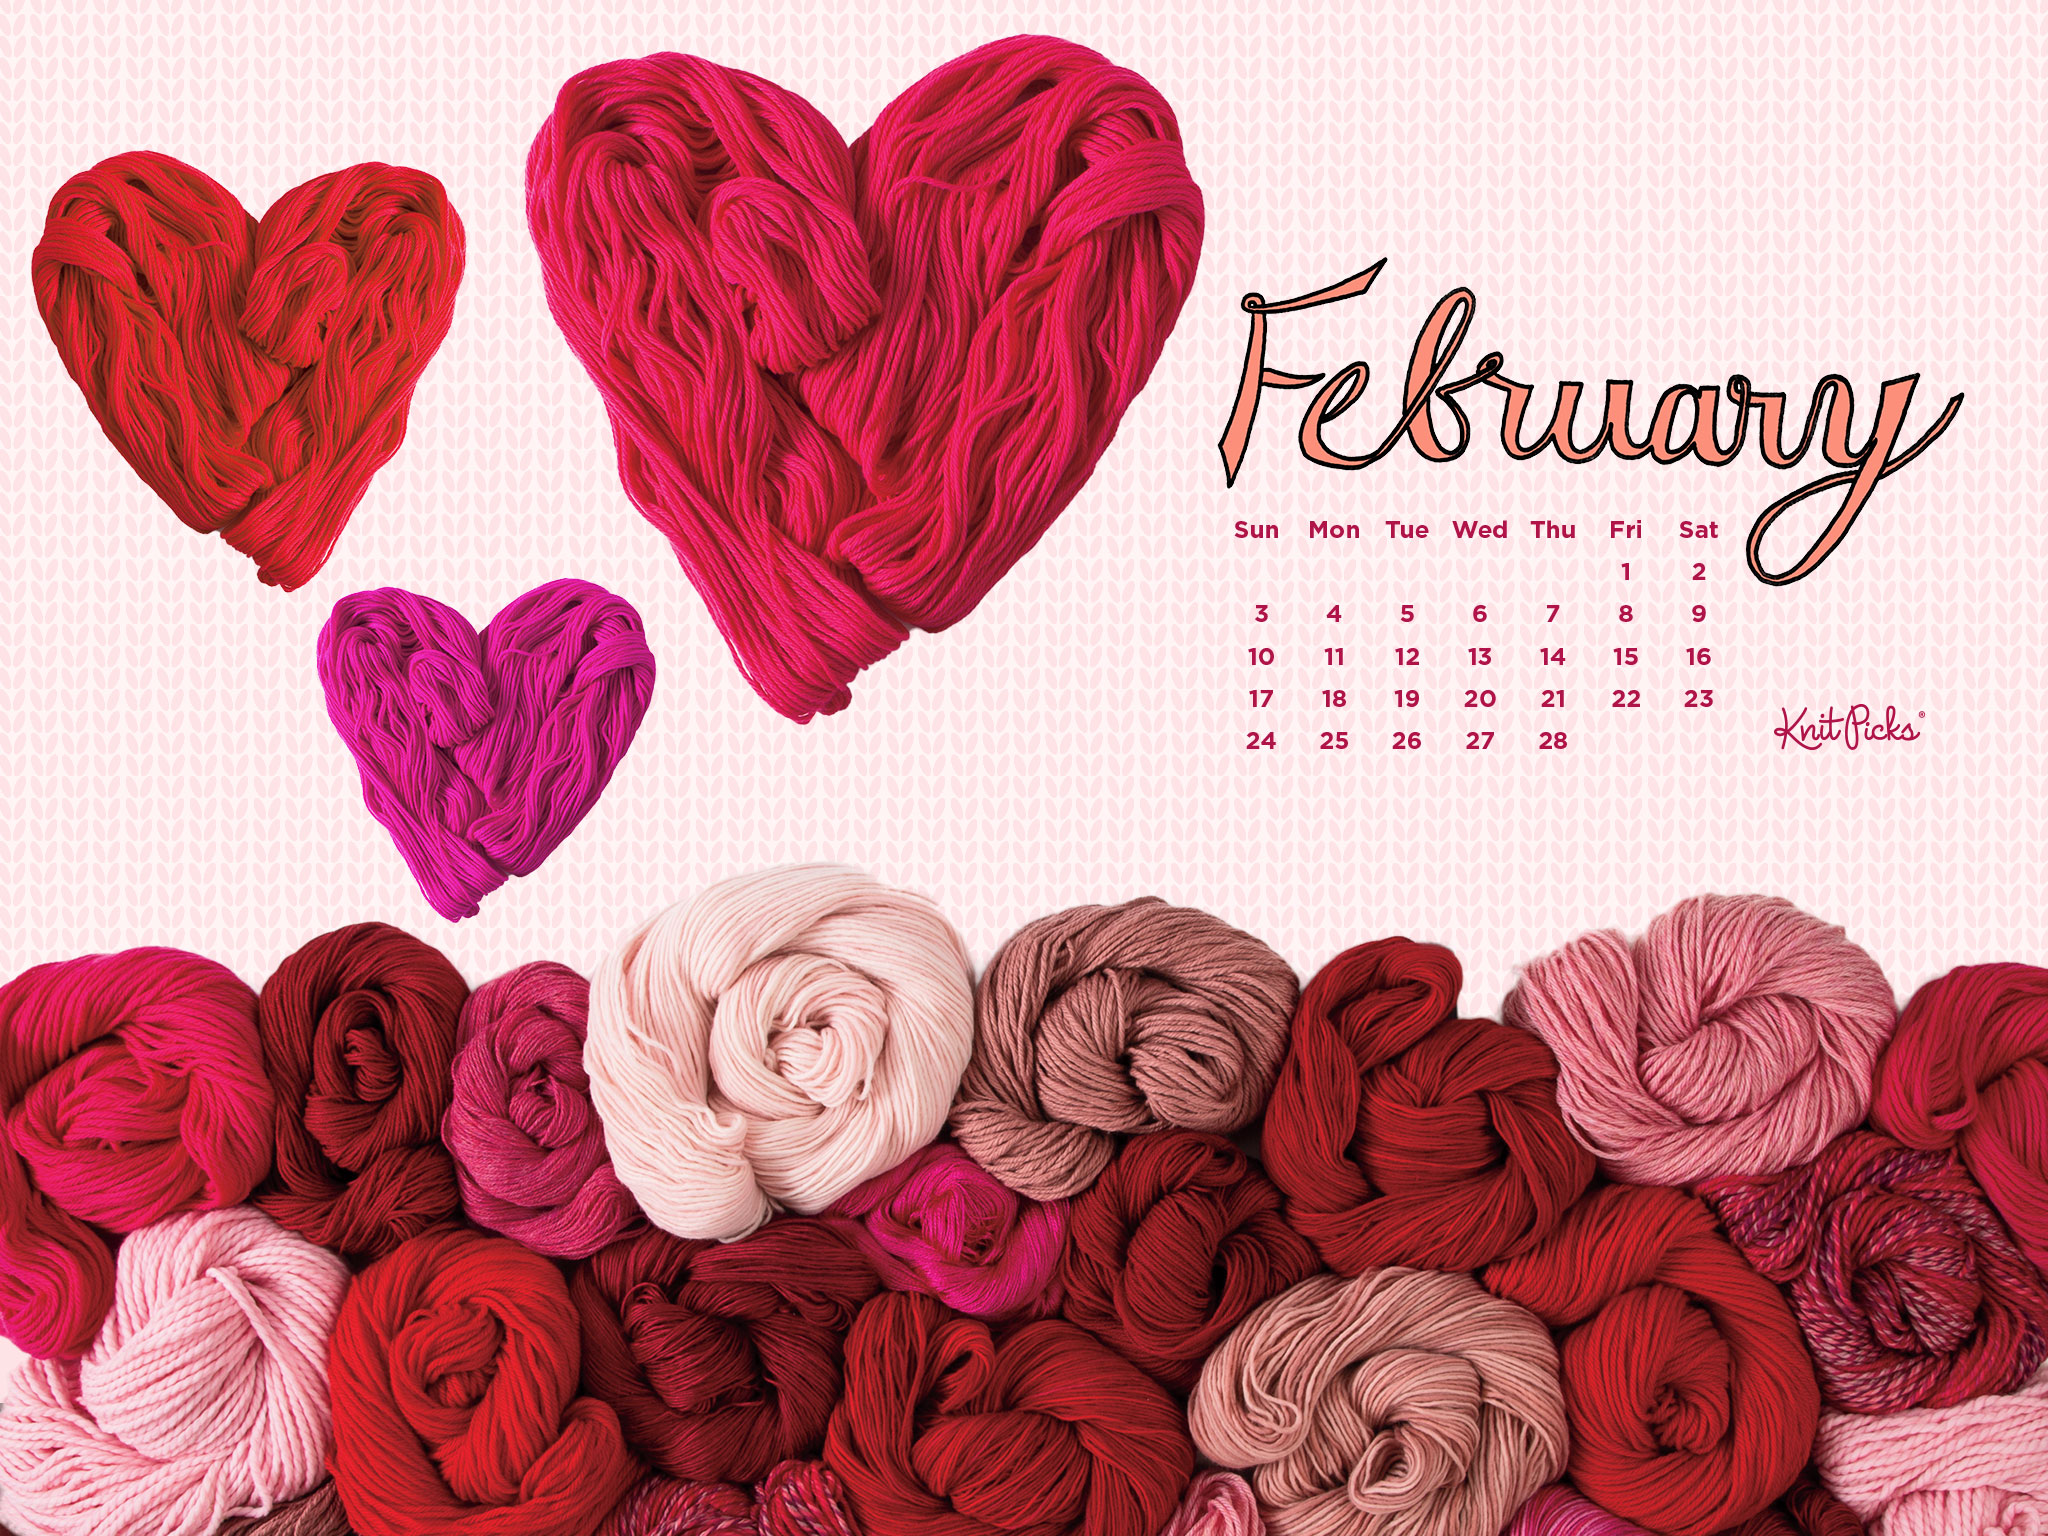 Able February Calendar Knitpicks Staff